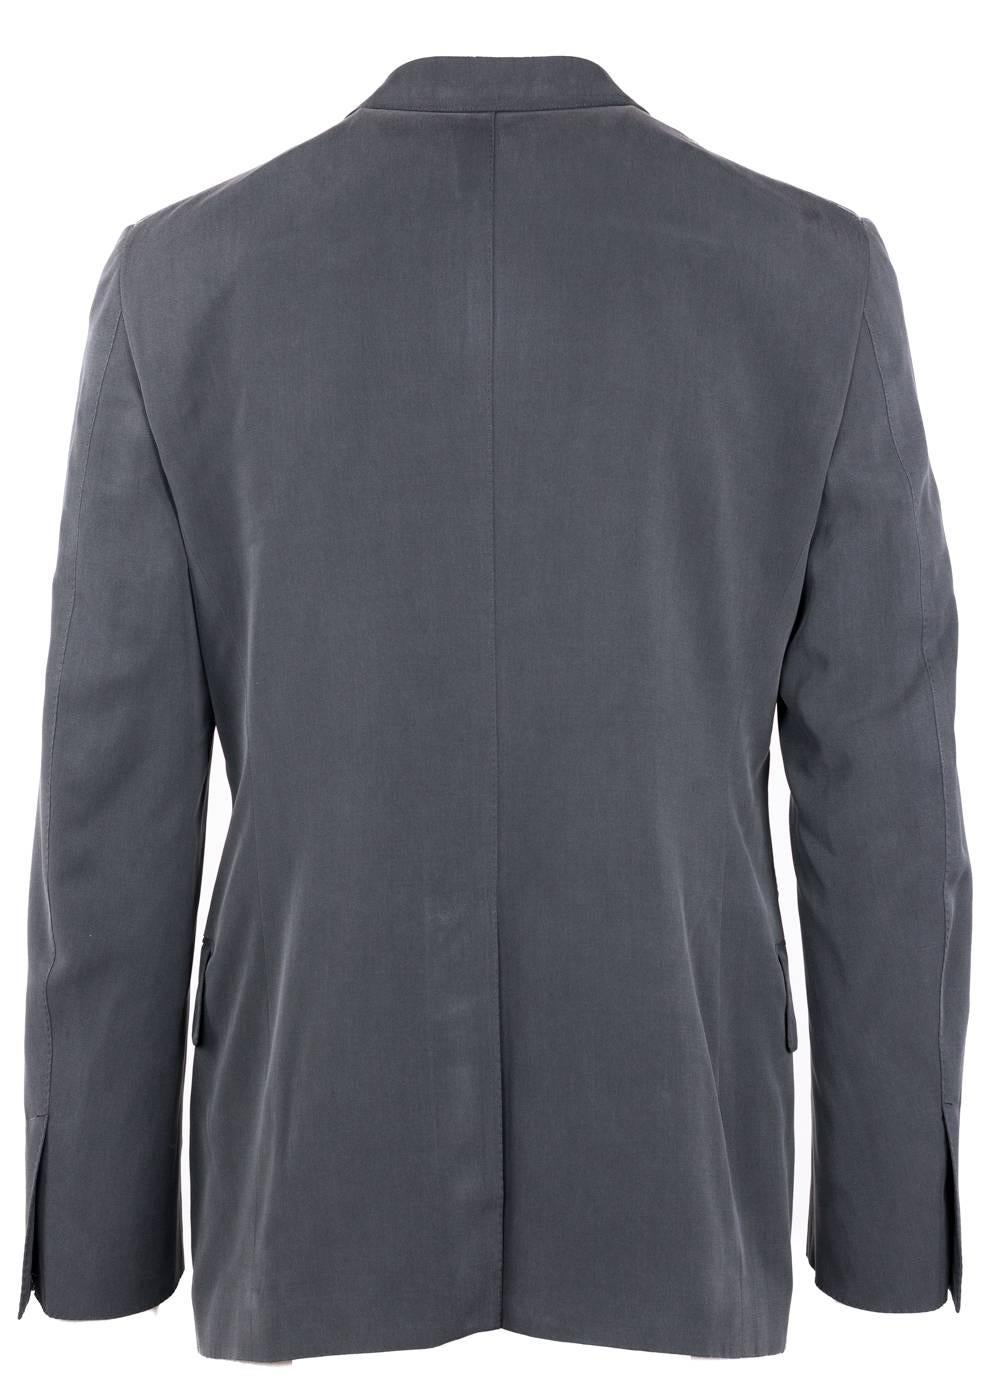 Black Tom Ford Slate Grey 100% Silk Shelton 2PC Suit For Sale